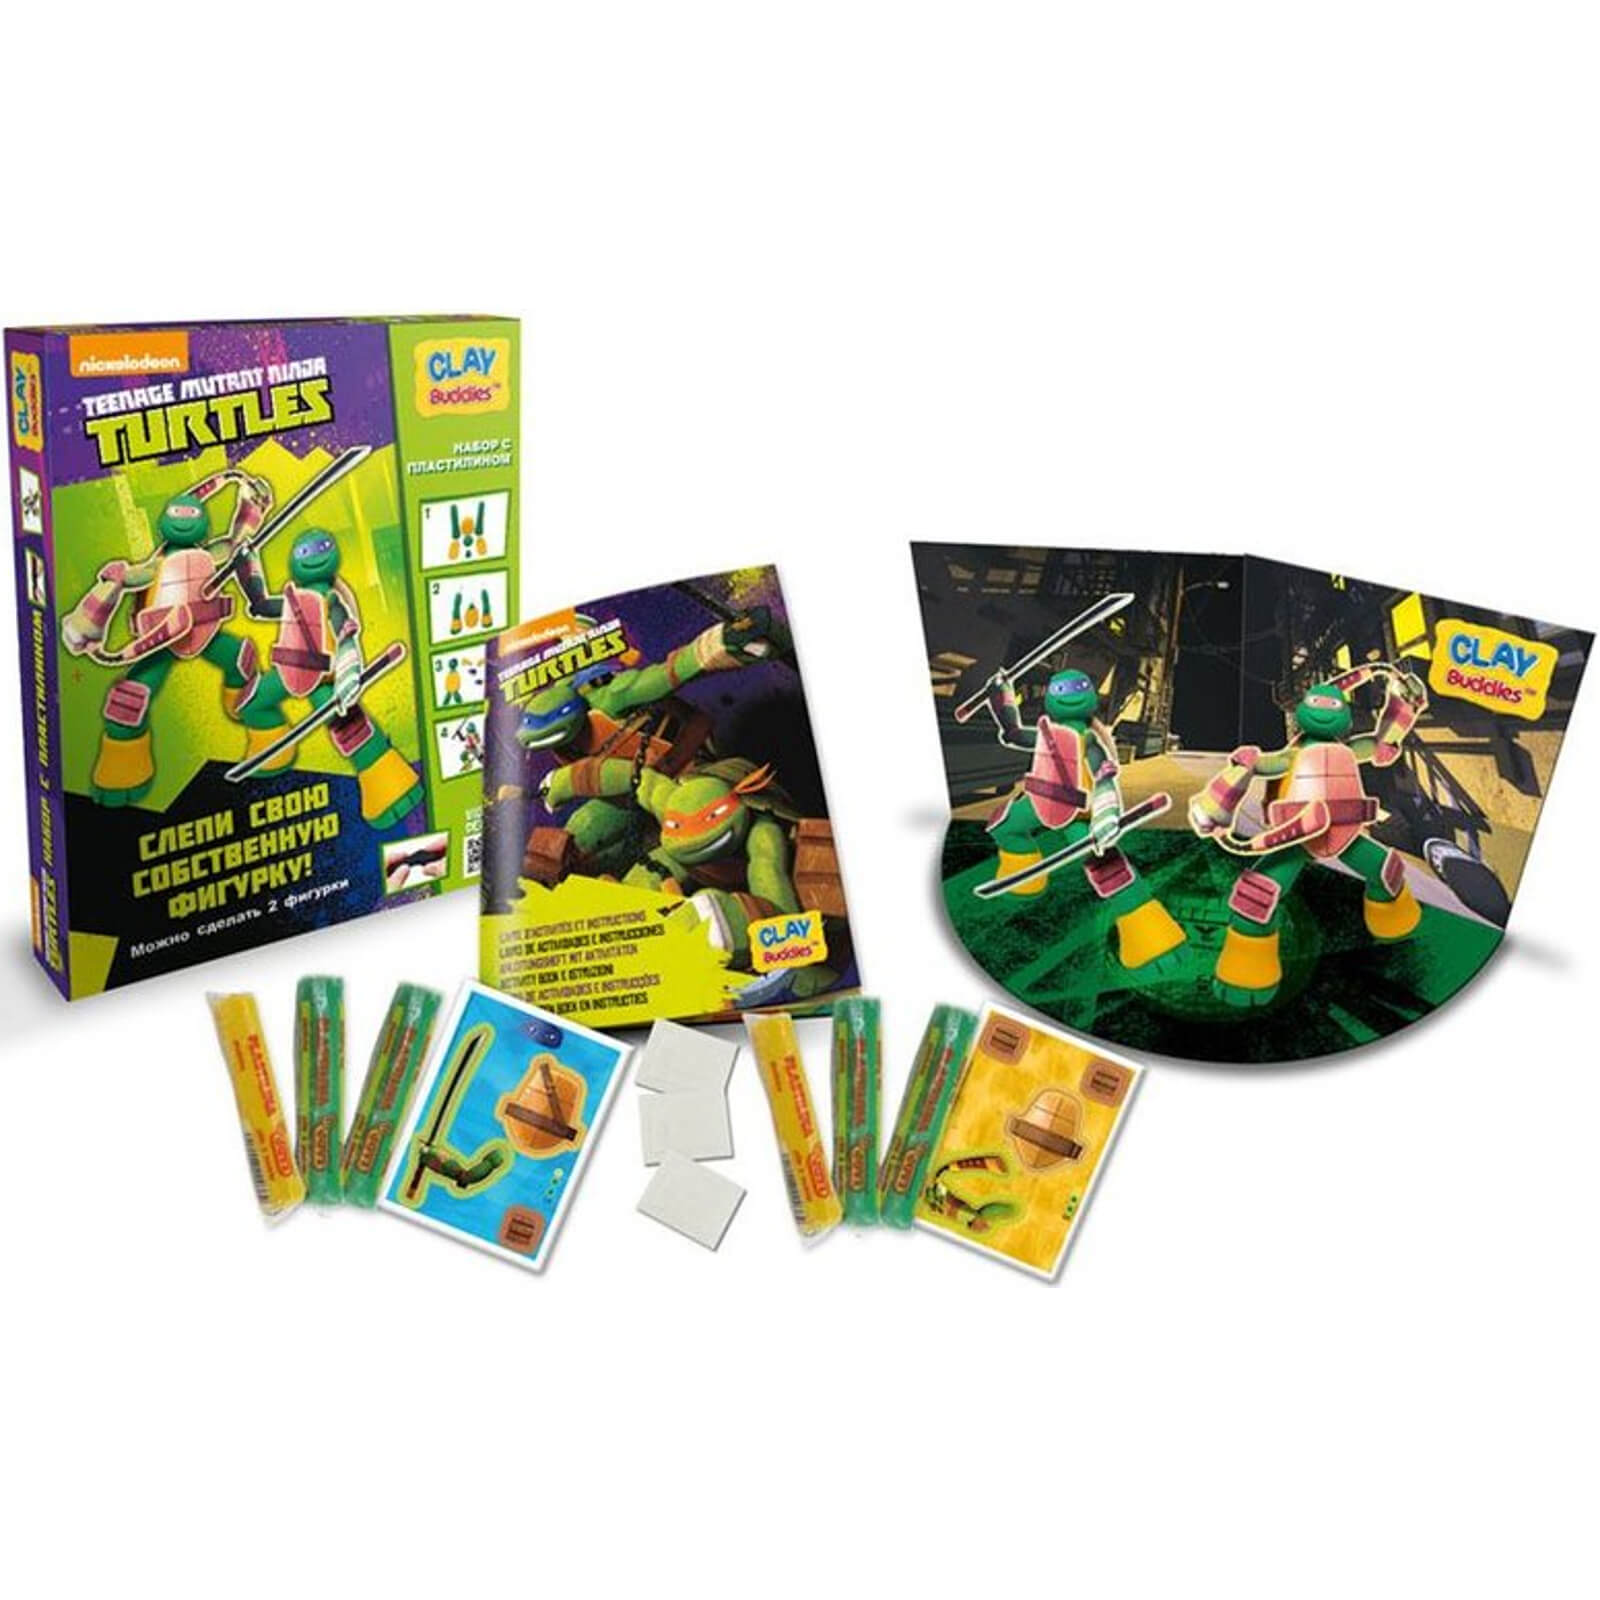 Mutant Teenage Mutant Ninja Turtles Clay Buddies Fun Kids Craft Pack Models Art Create